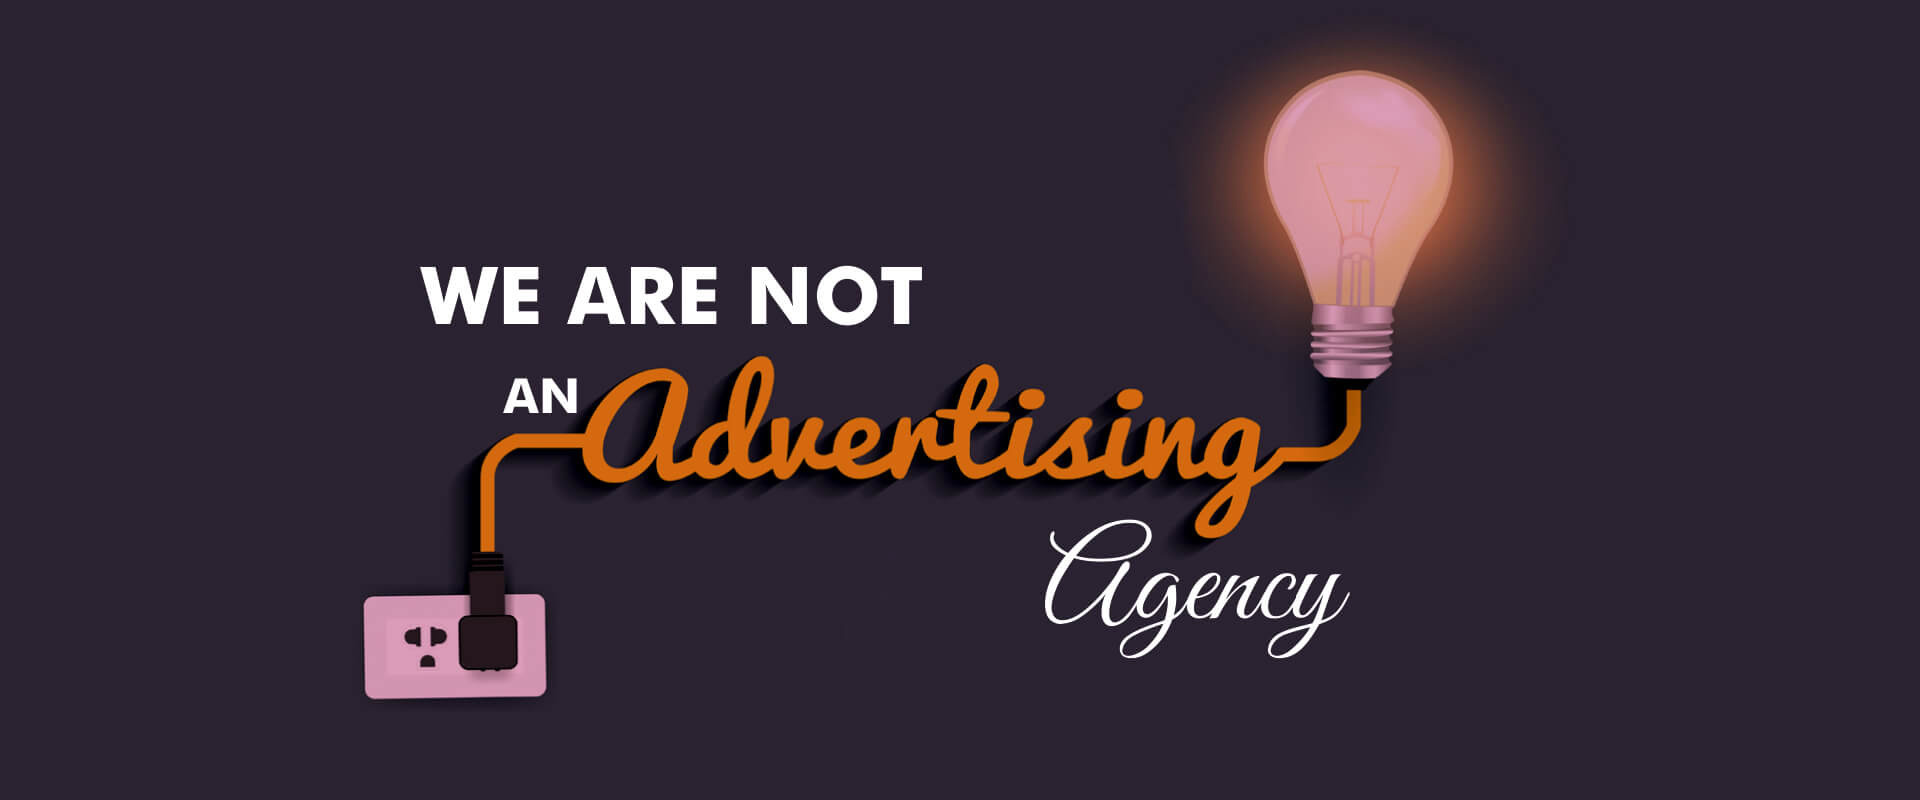 advertisment agencies